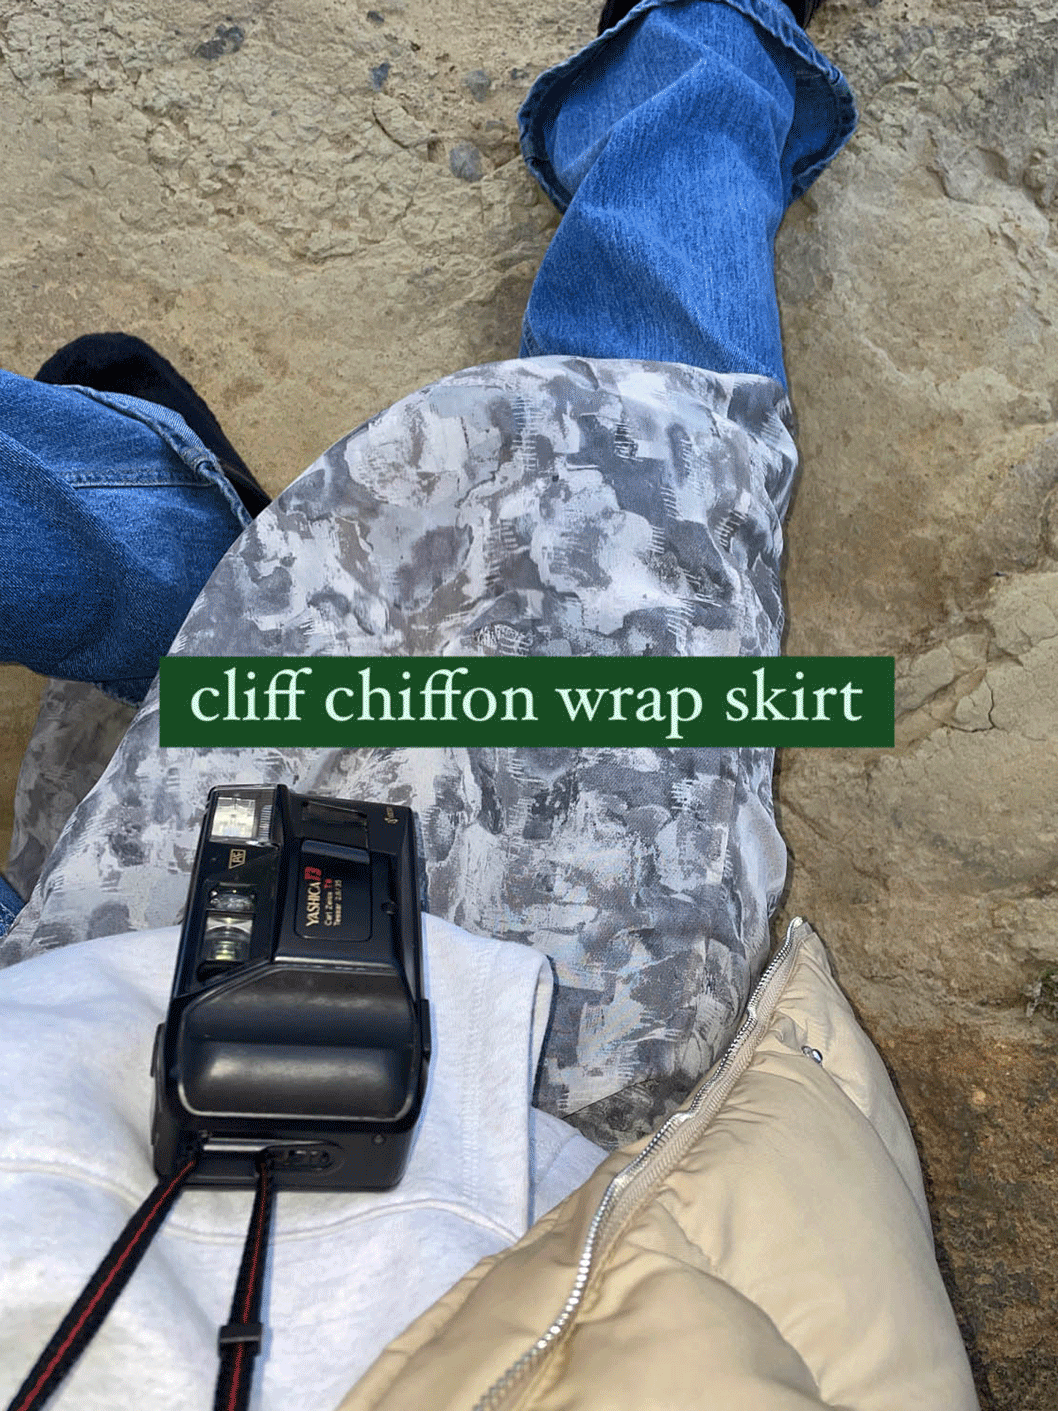 [9hope] cliff chiffon wrap skirt